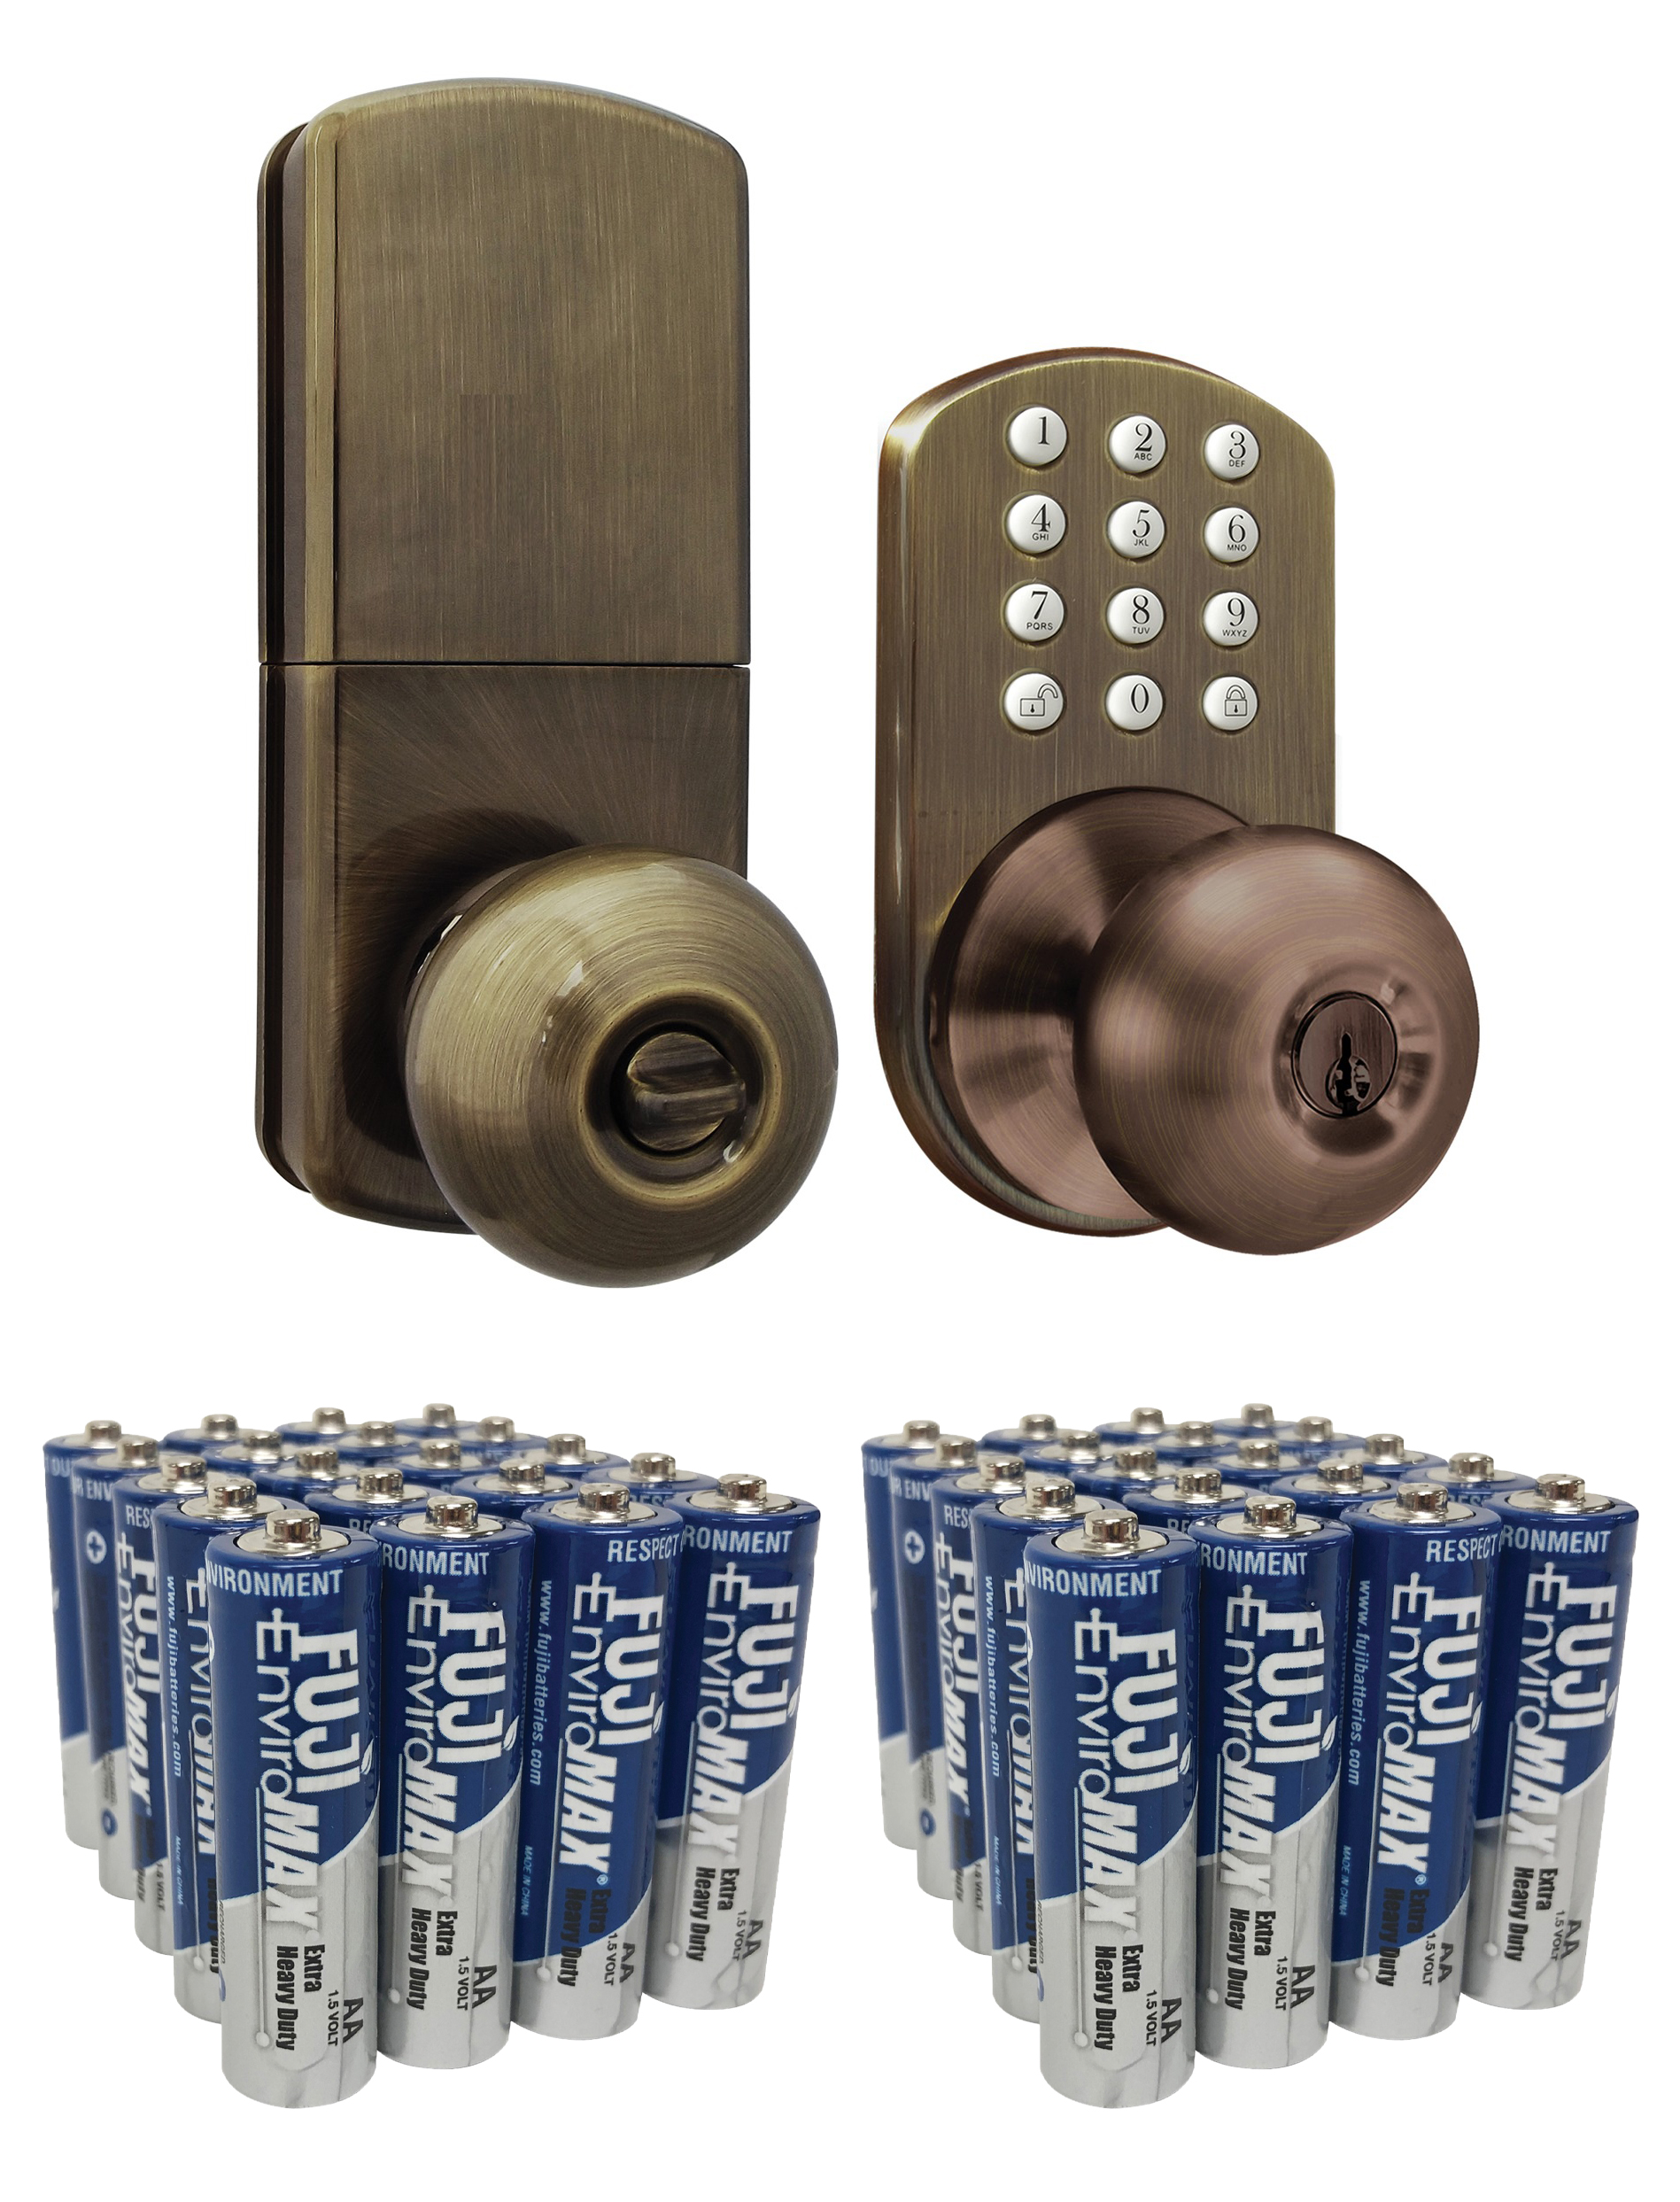 MiLocks HKK-01AQ Touchpad Electronic Doorknob (Antique Brass) & Fuji Batteries 3300BP20 EnviroMax AA Extra Heavy-Duty Batteries (20 pk) - image 1 of 3